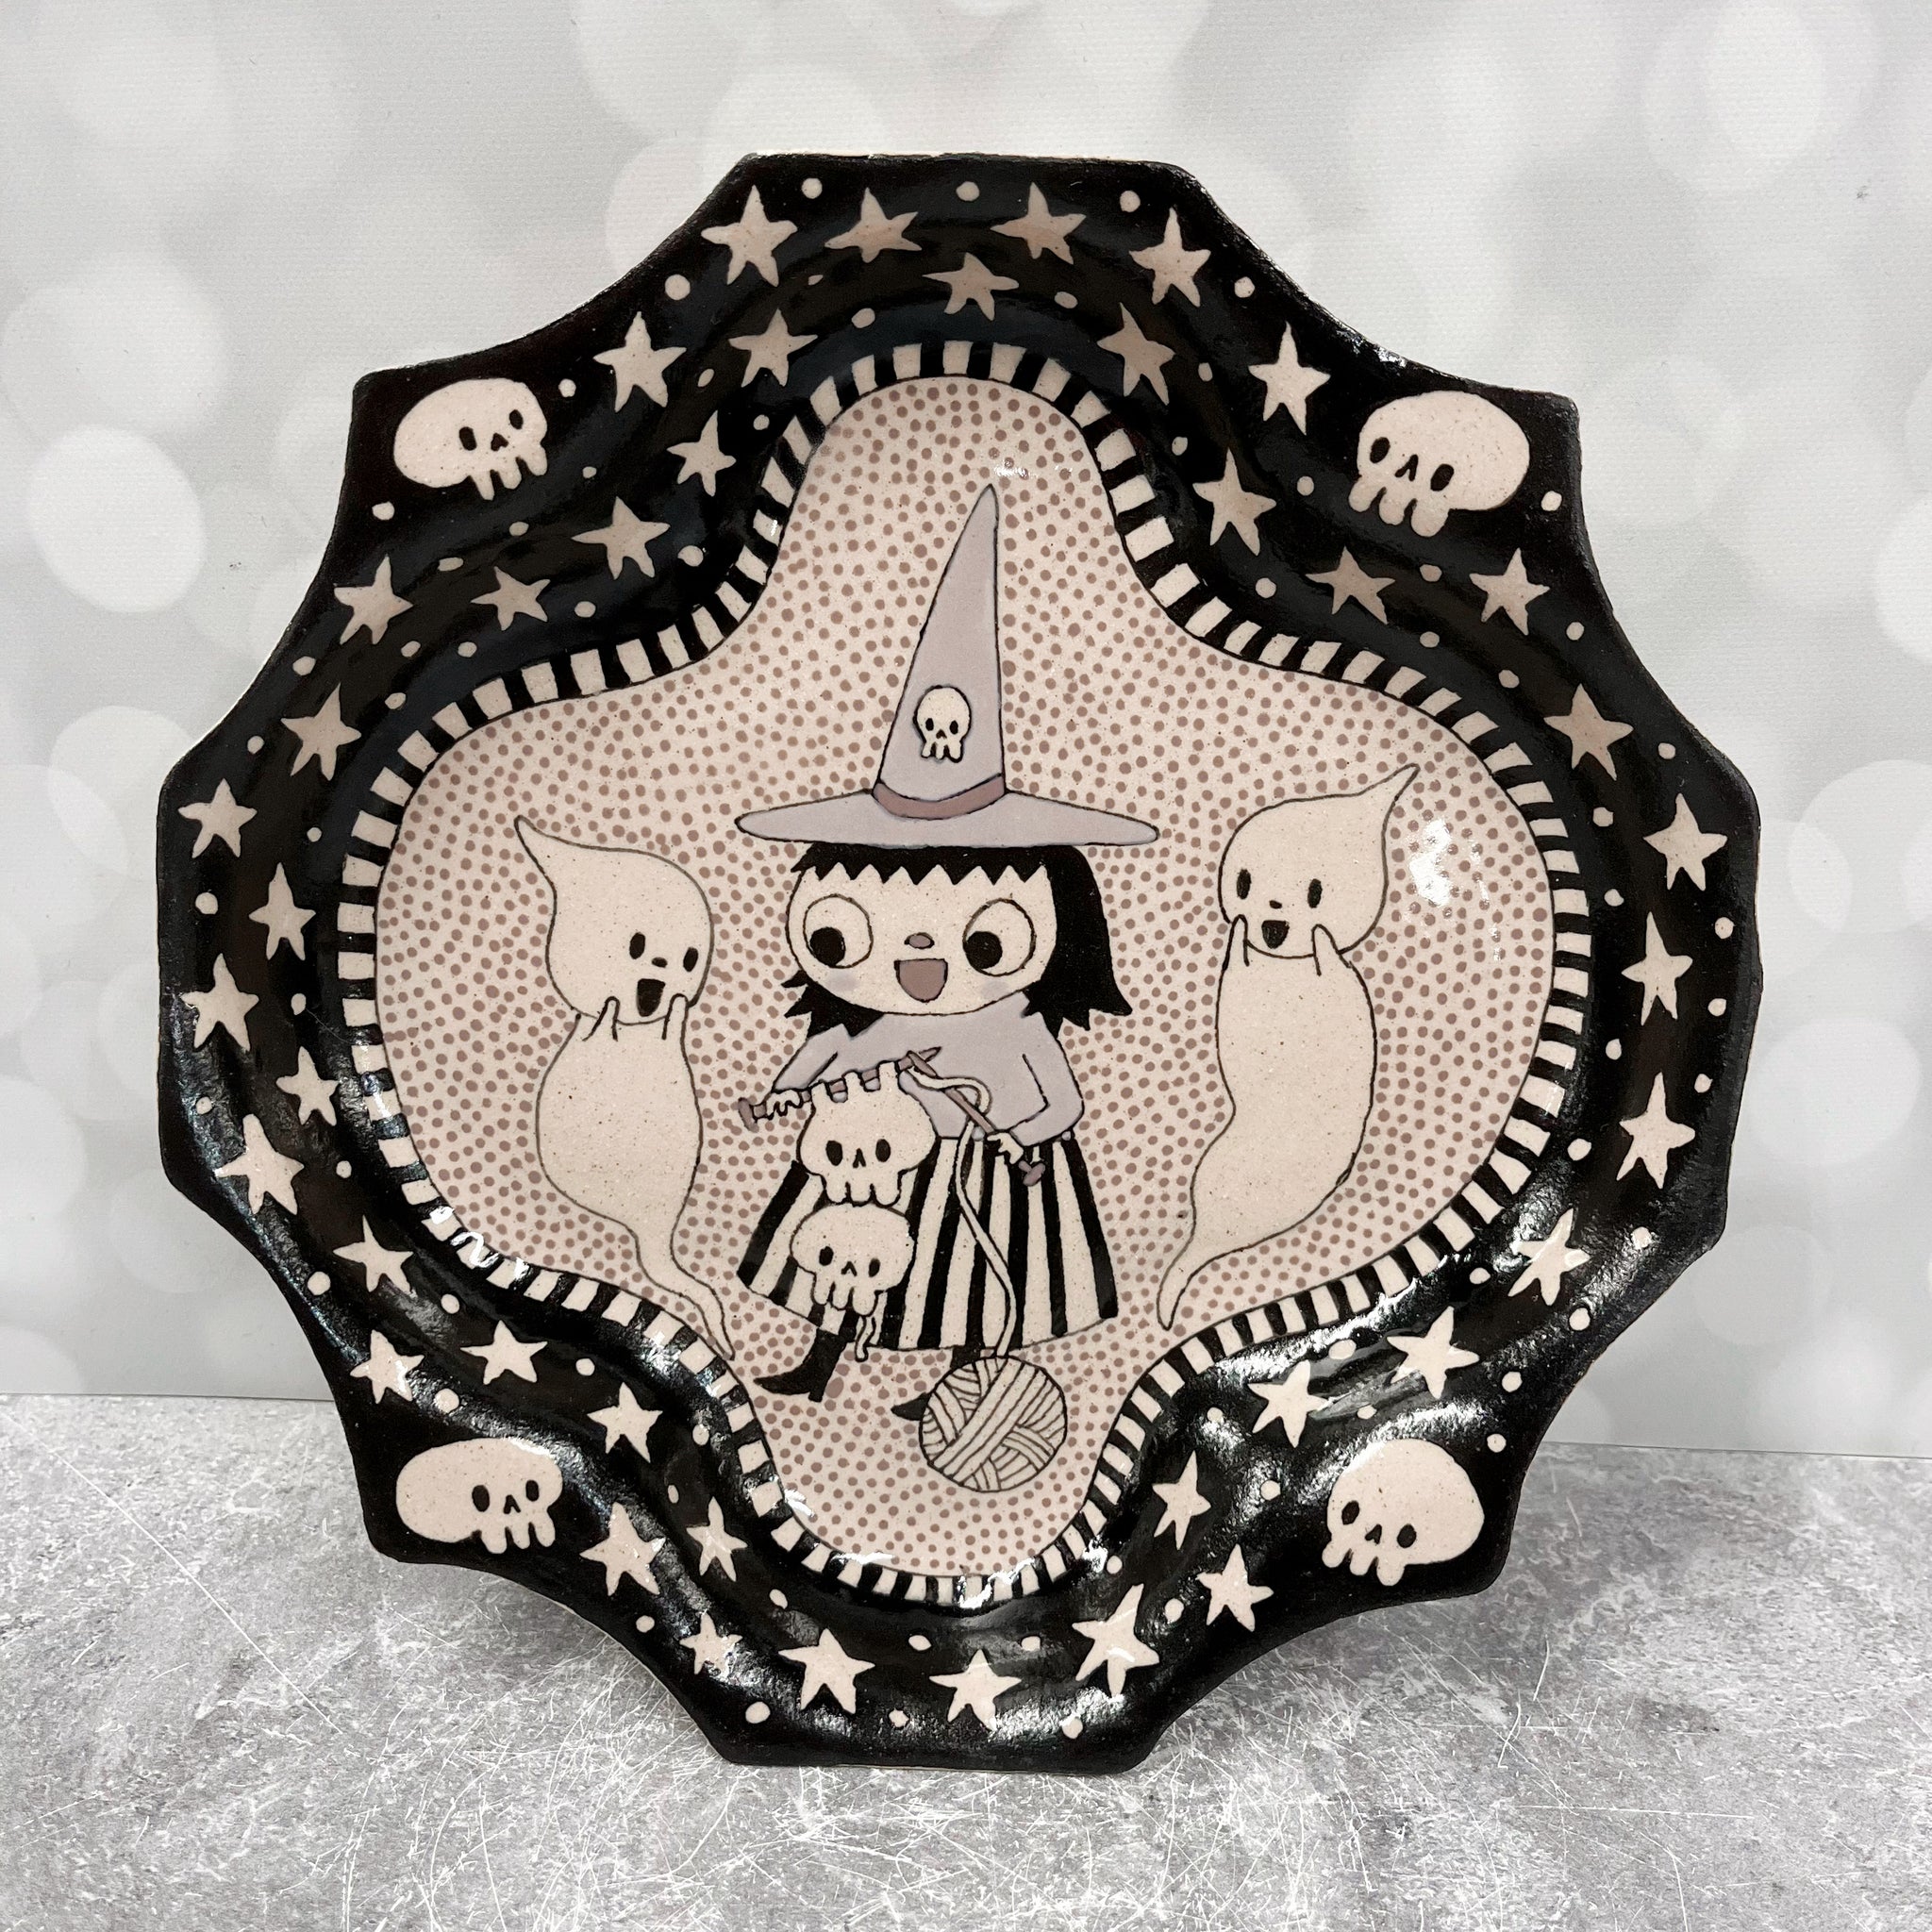 Ceramic Hand Built Witch Dish 8"